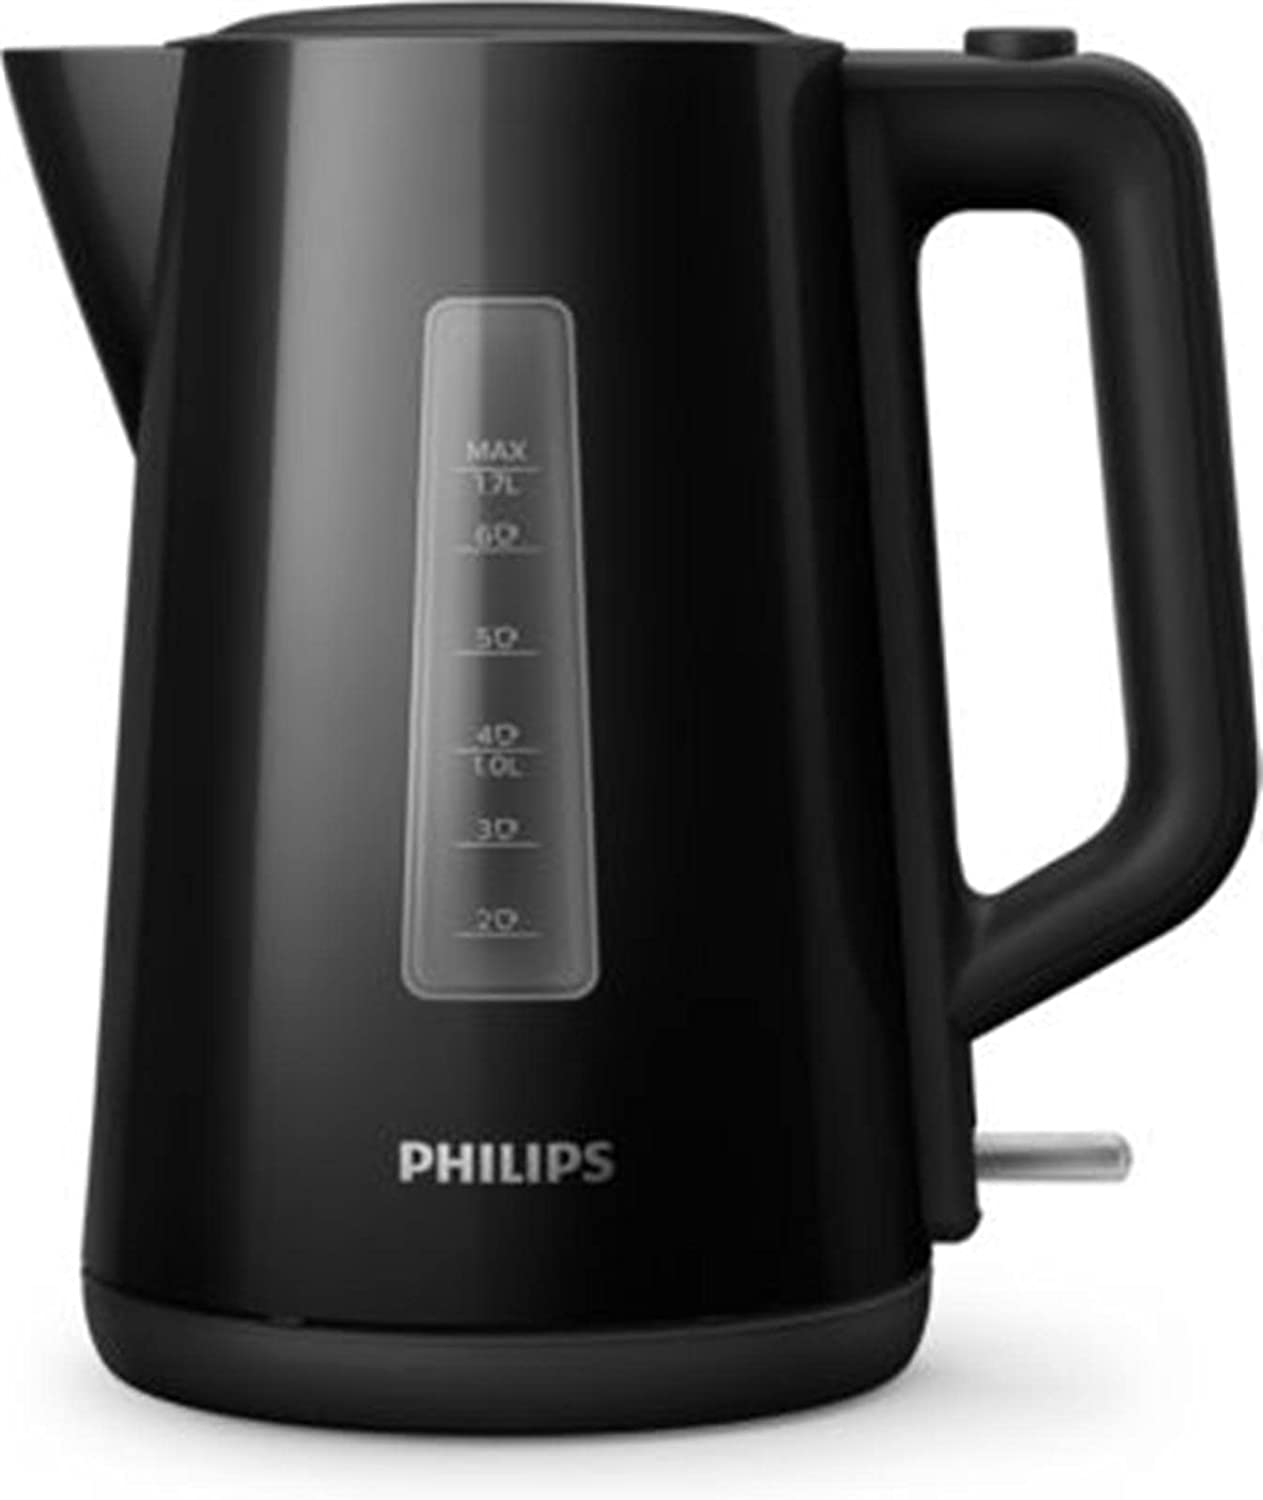 Philips Domestic Appliances Philips HD9318/20, Black